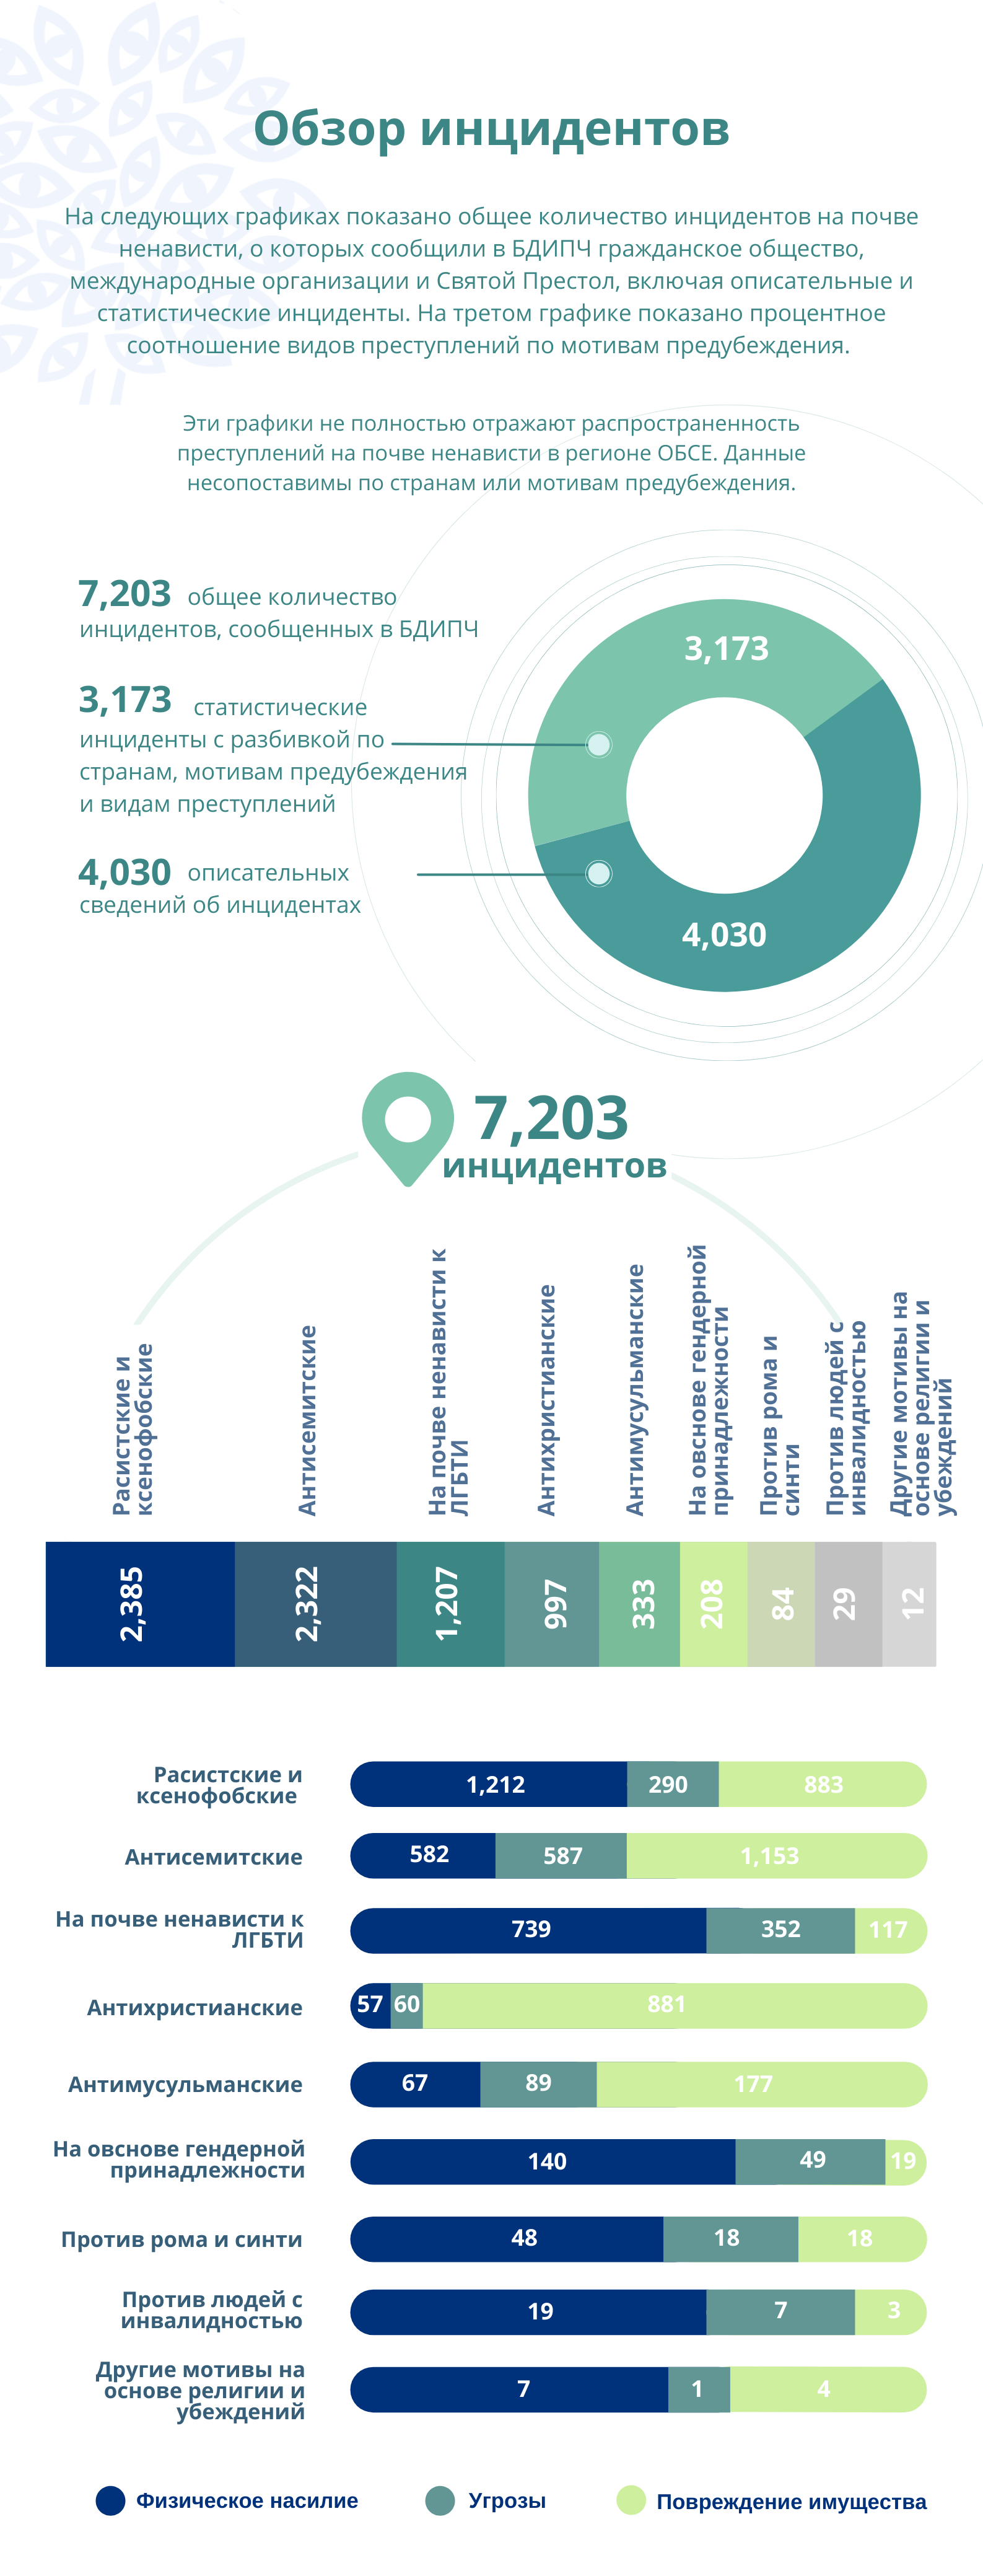 2020_HCR publication infographic_2_RU